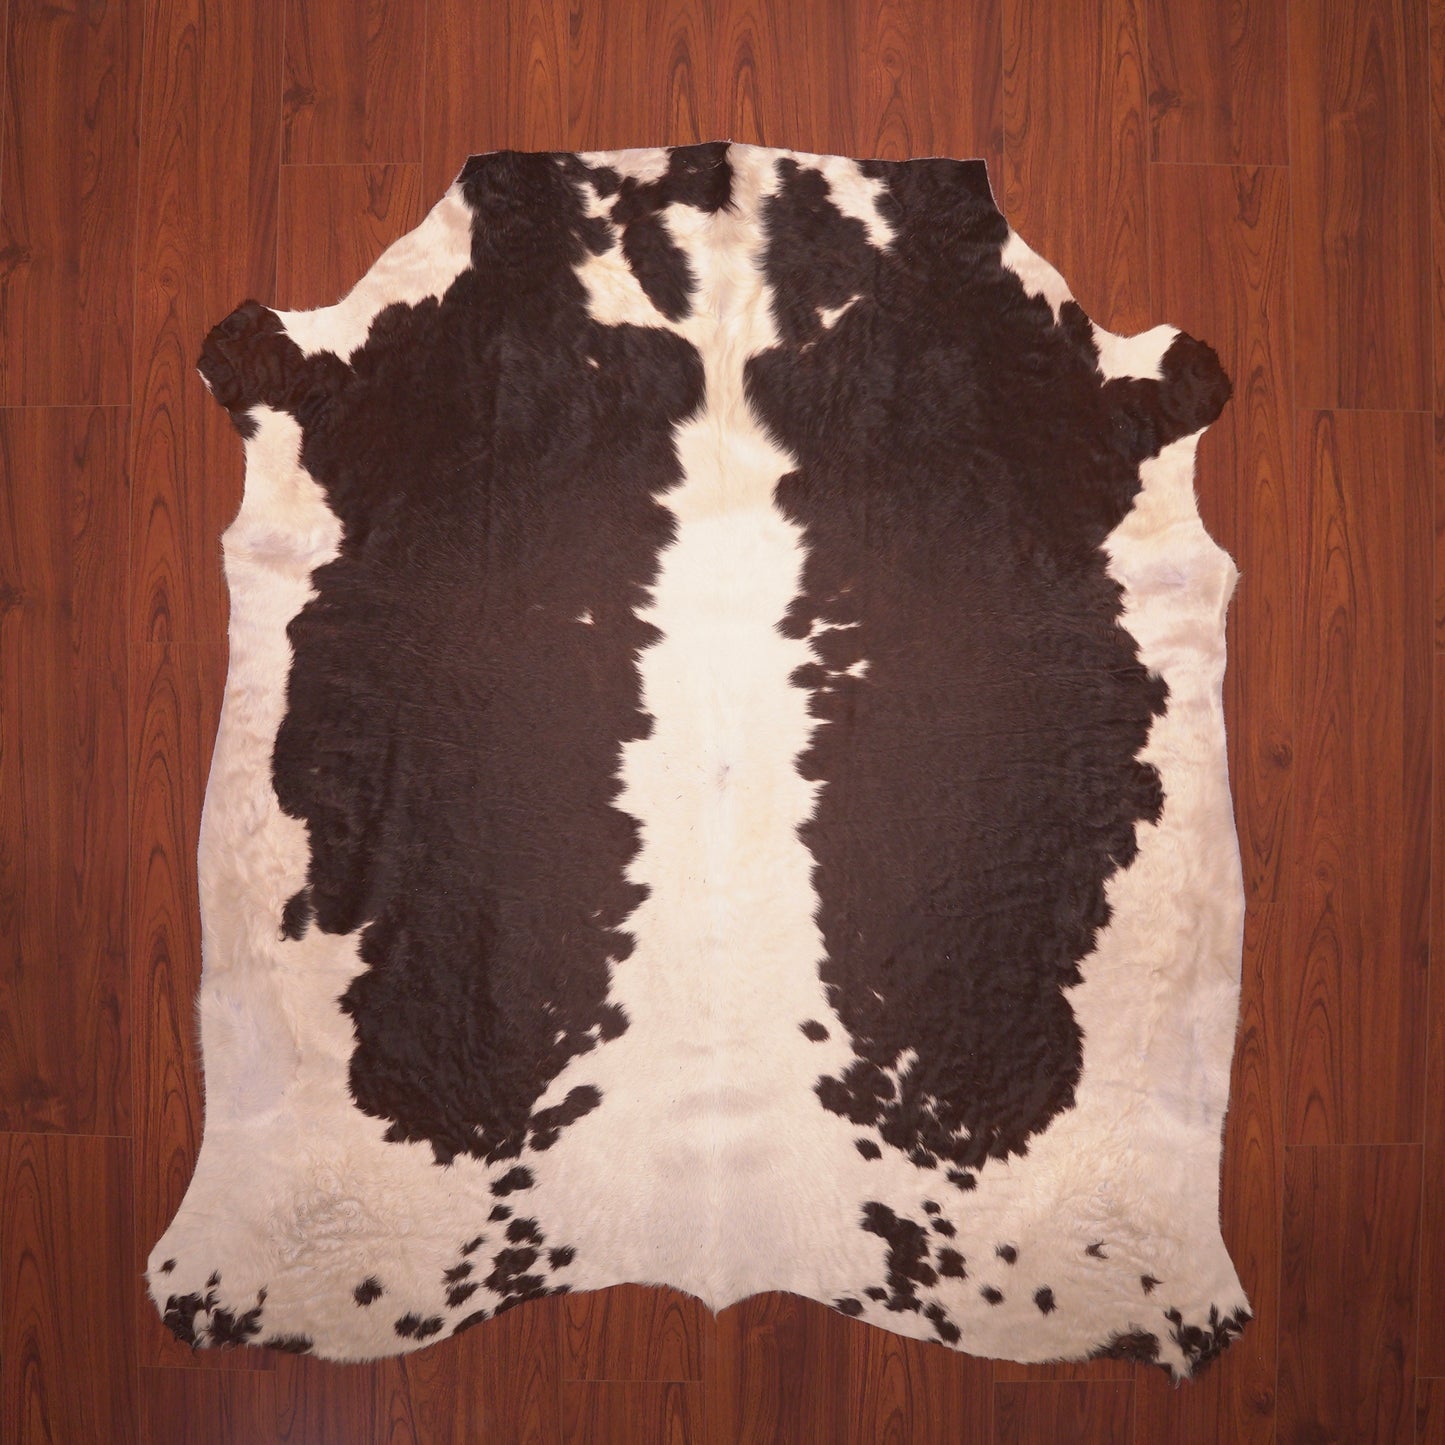 nguni guy cow skin hide rug mat brown and white